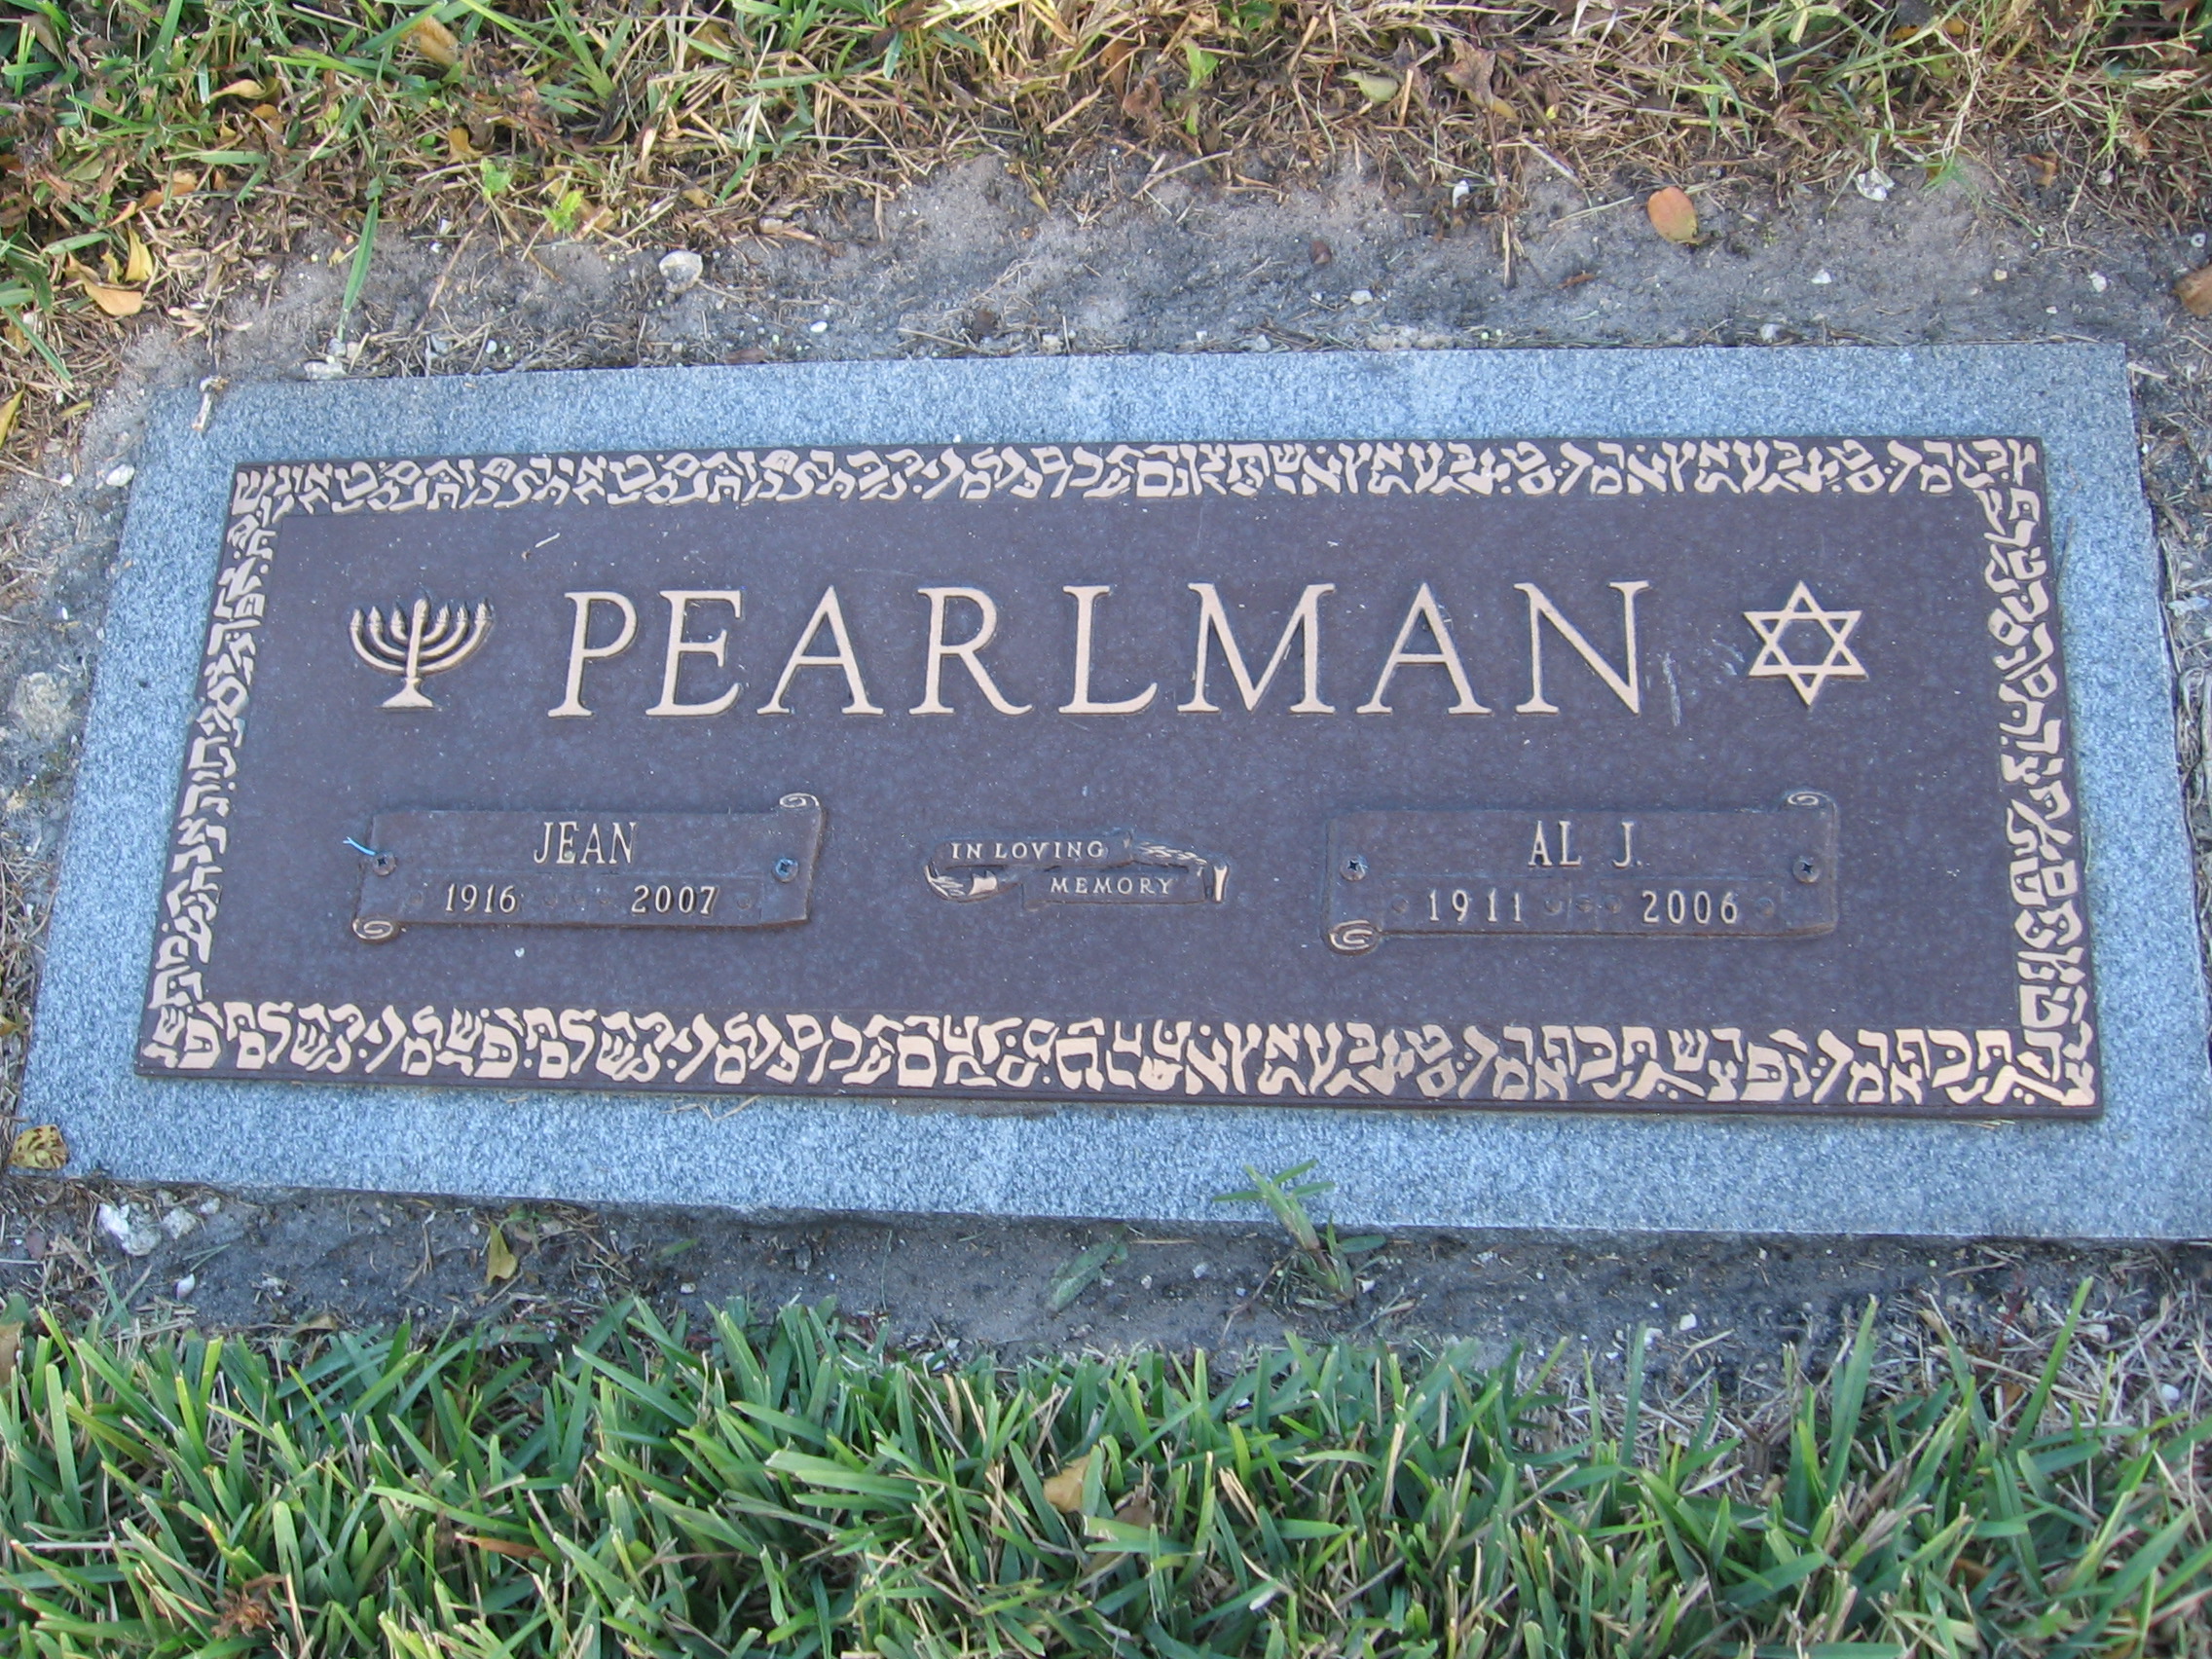 Jean Pearlman